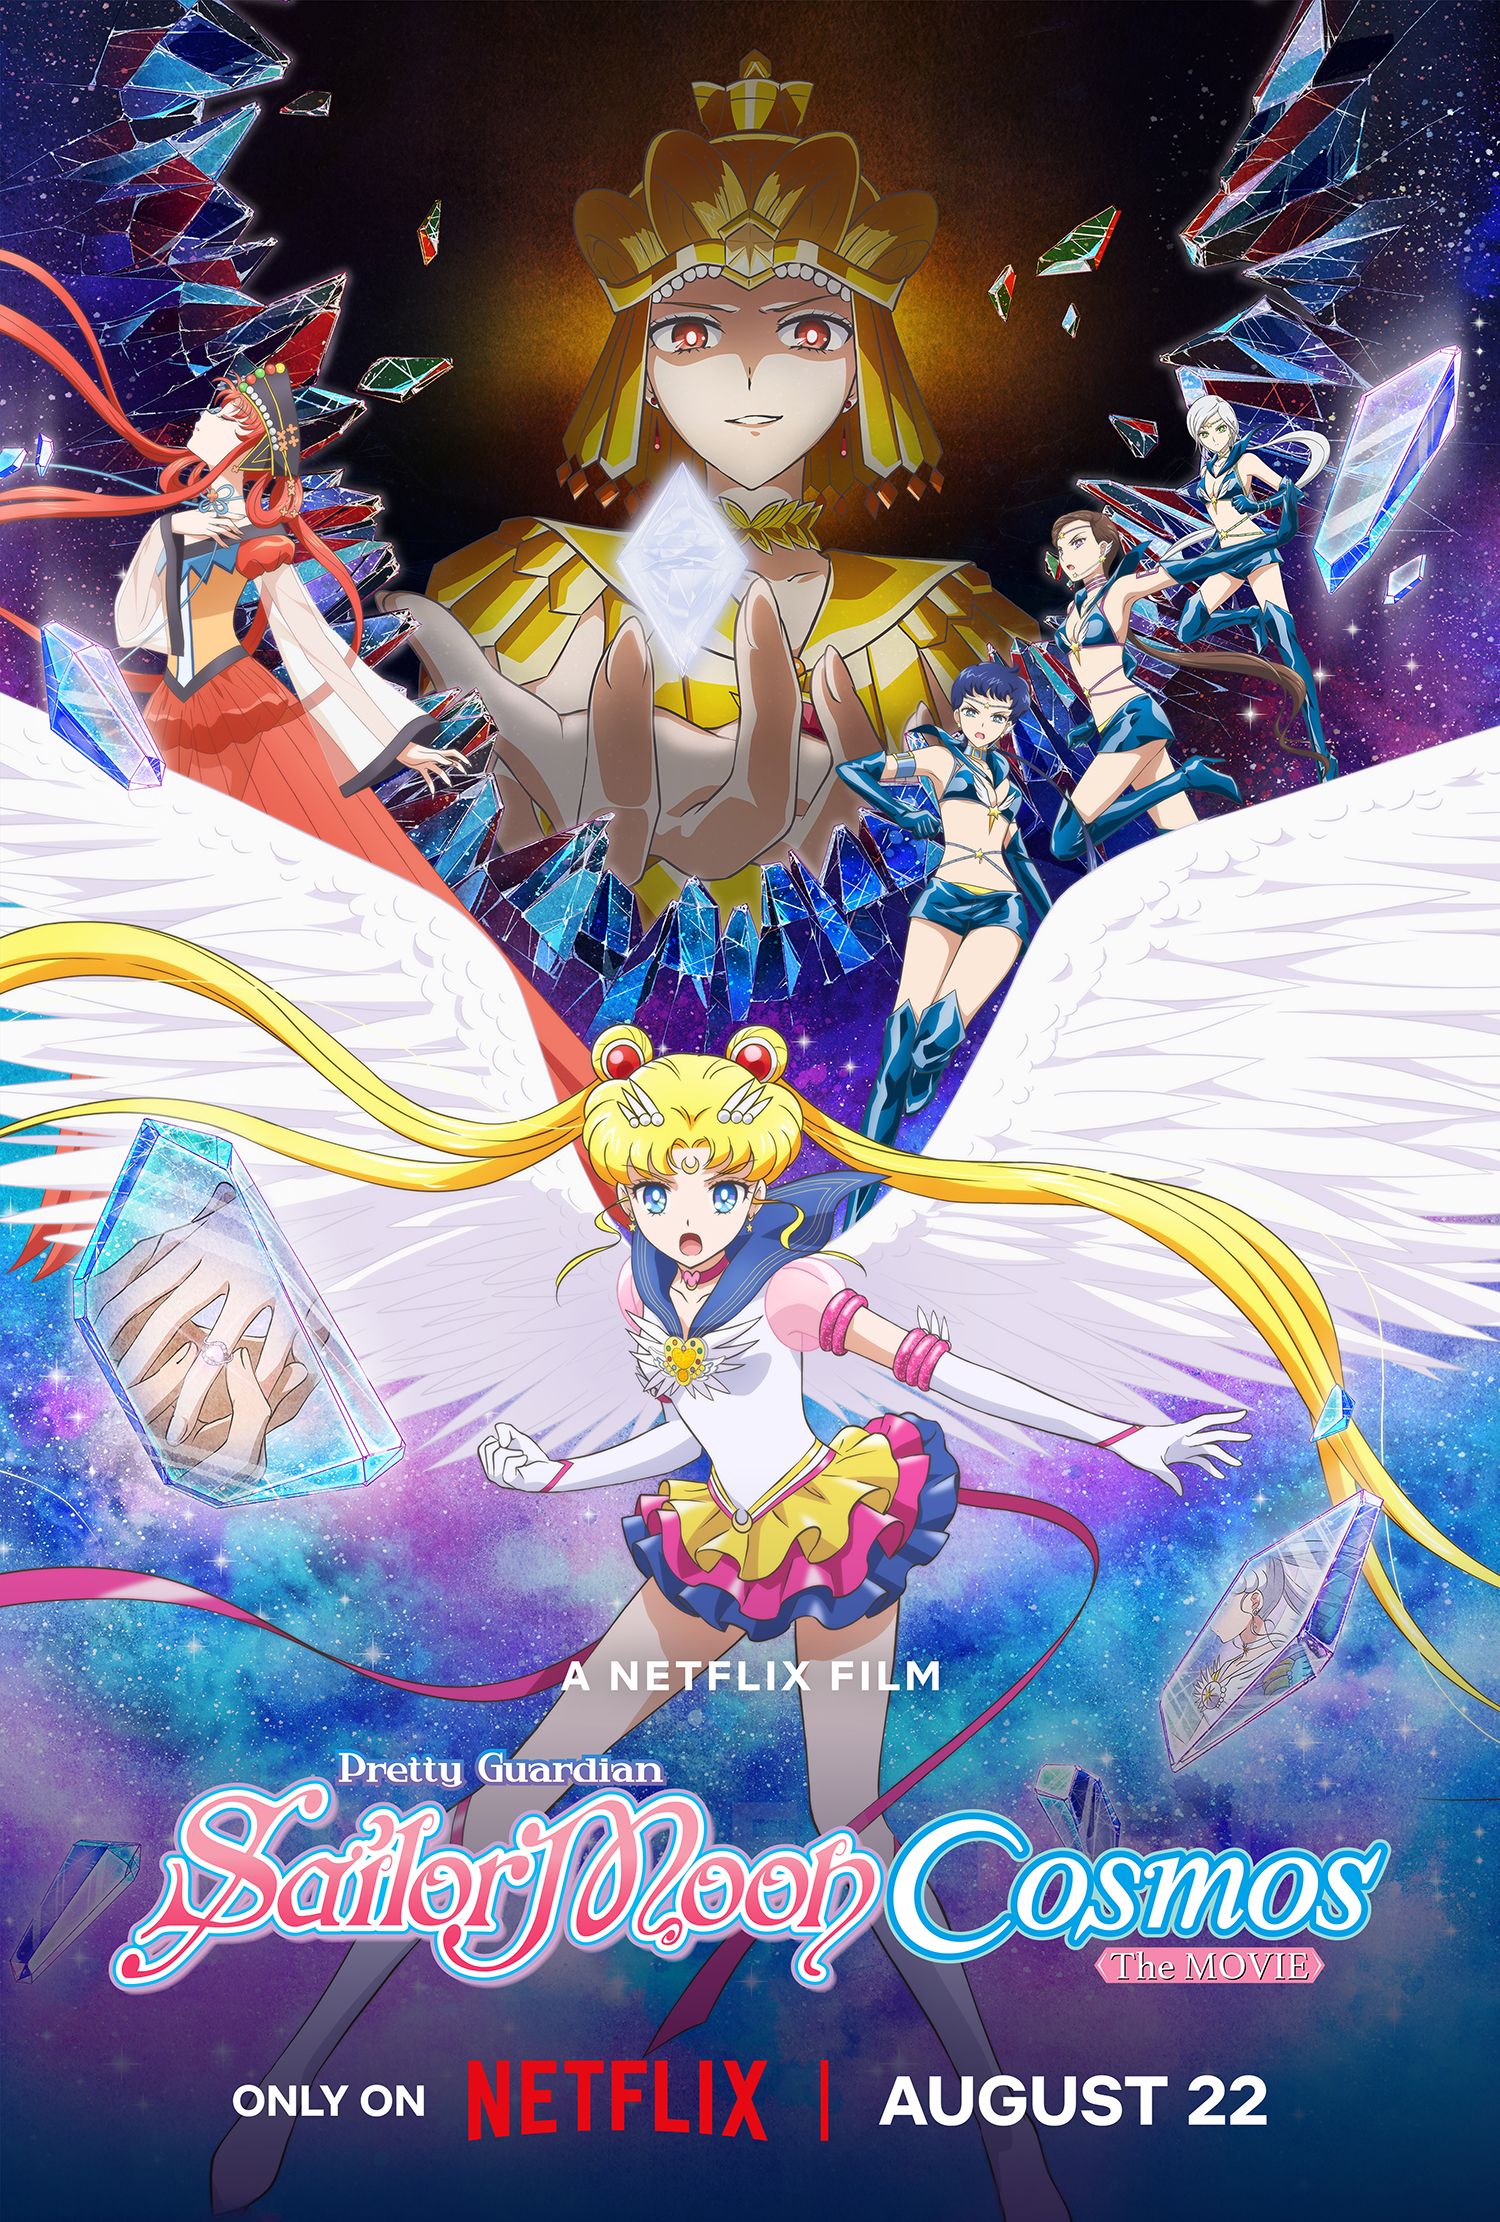 Netflix's Sailor Moon Cosmos movie official key visual